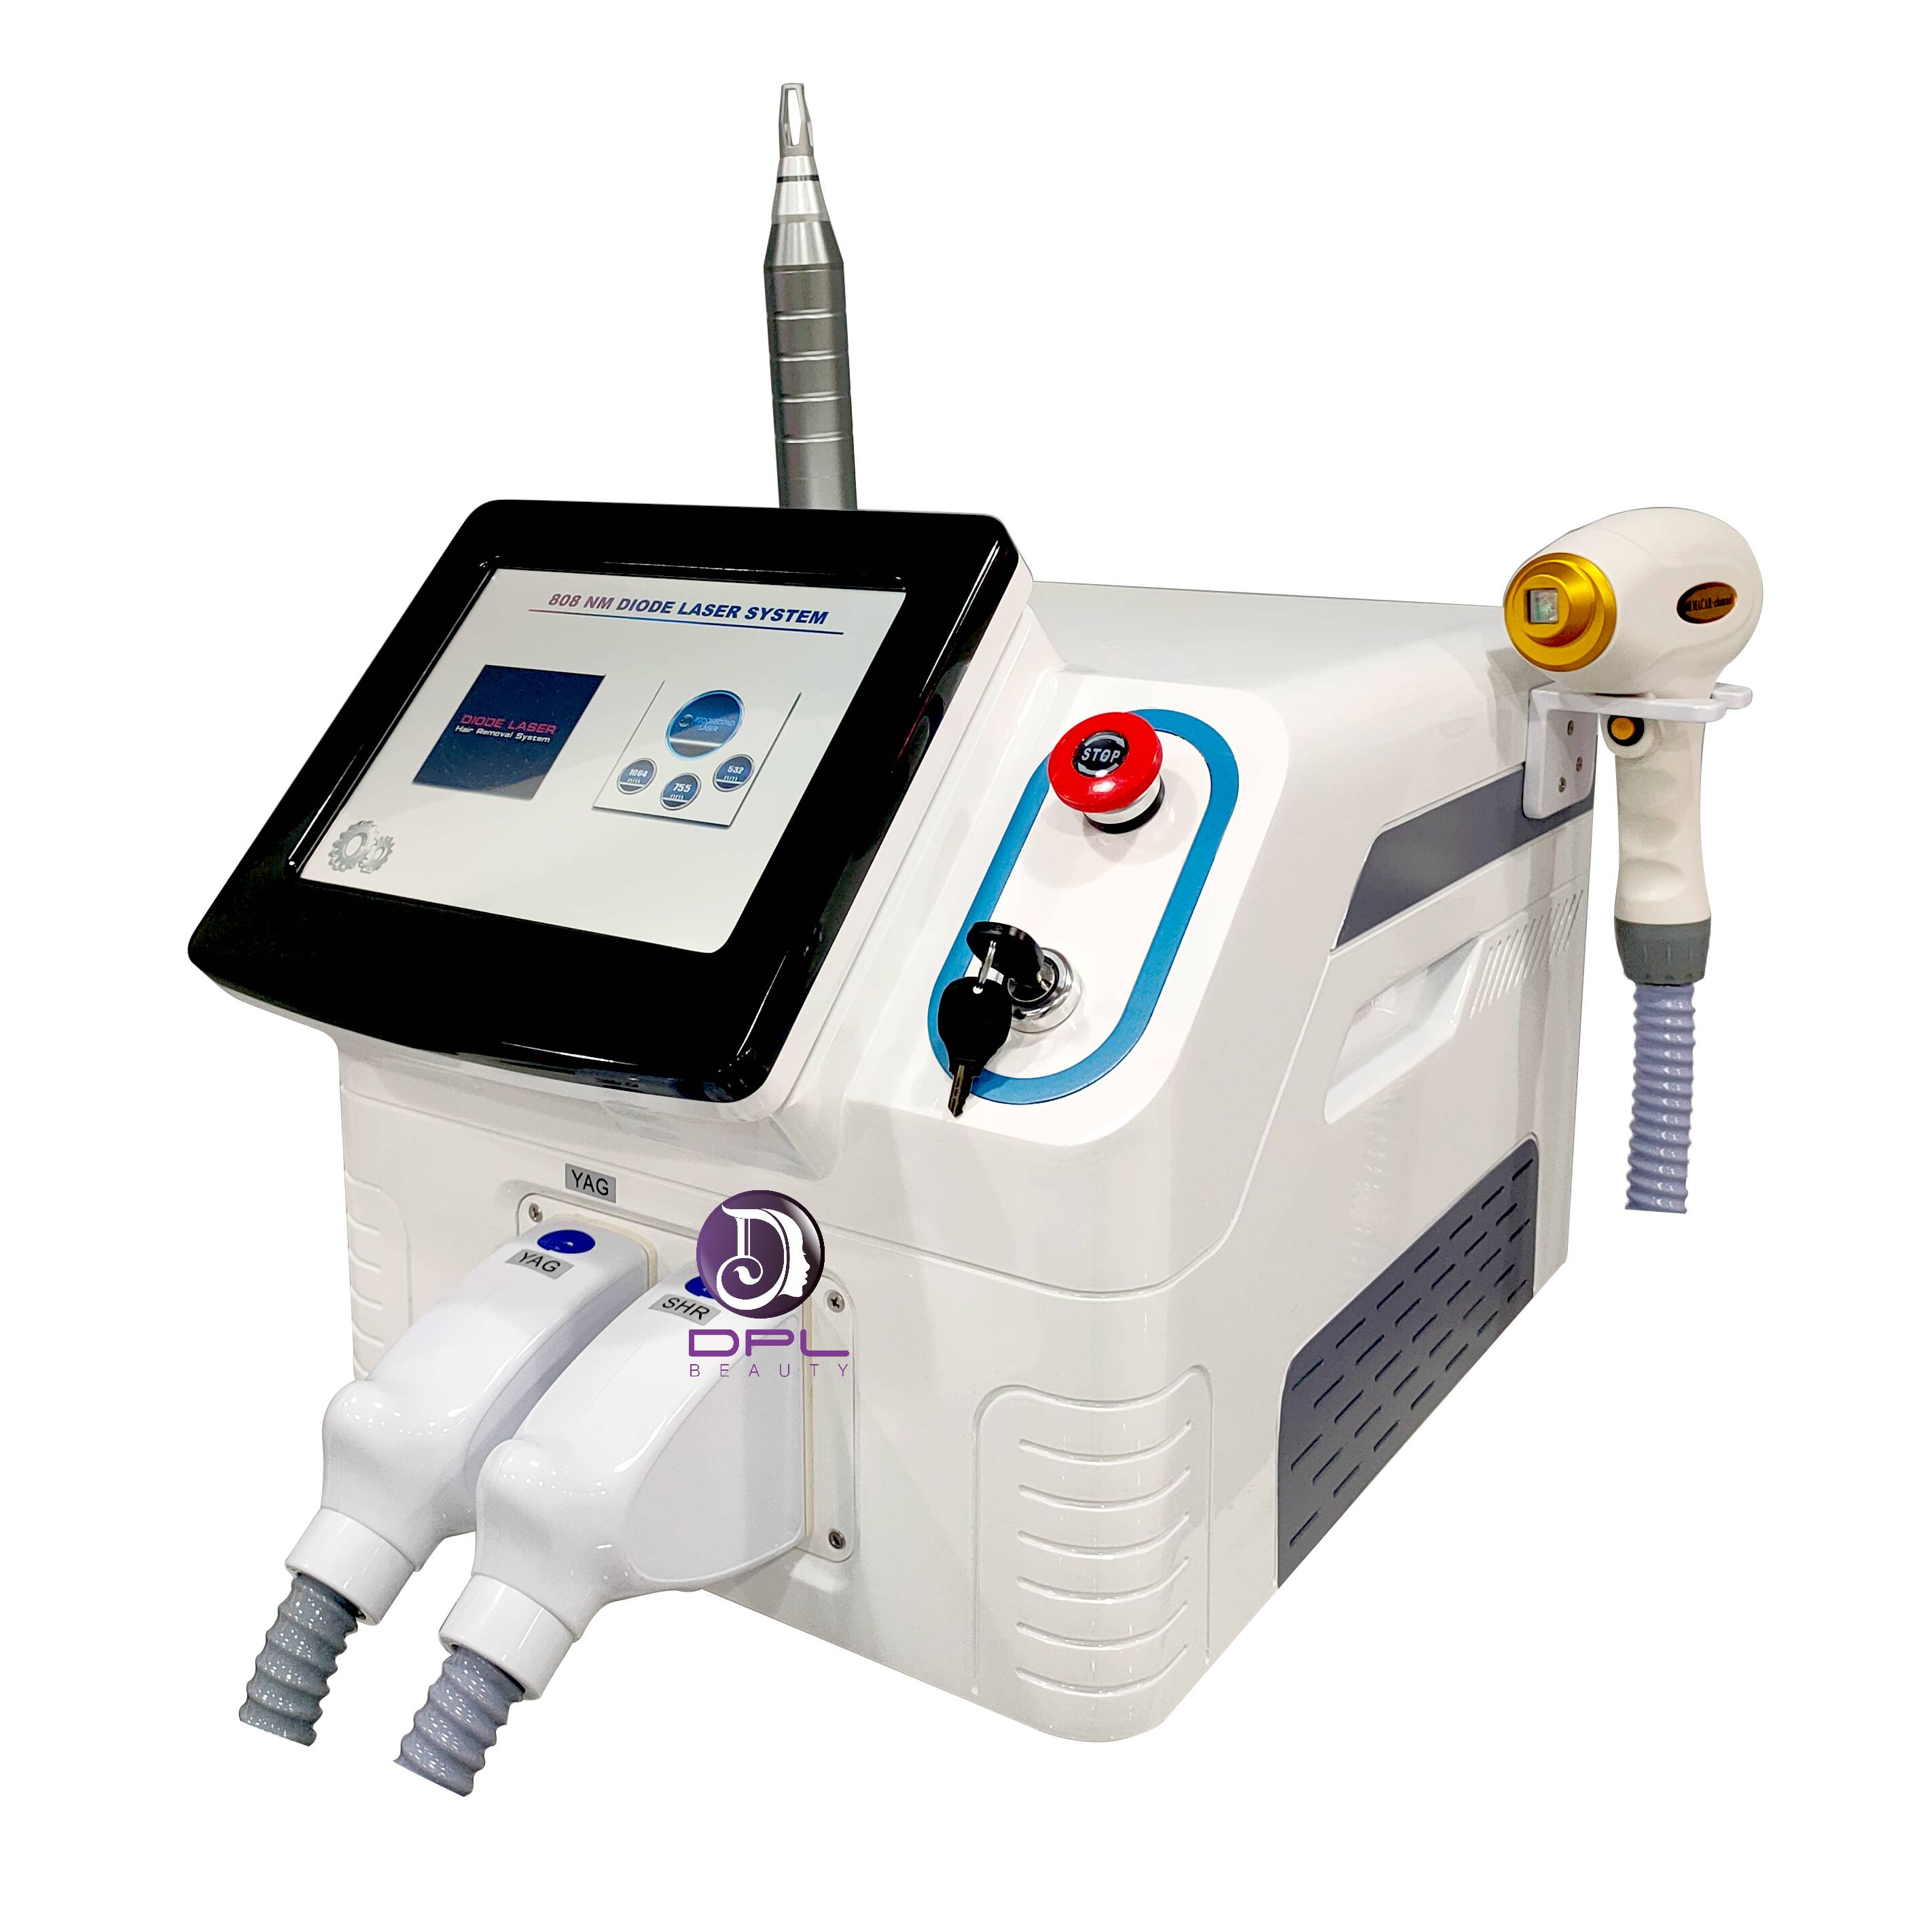 Picosecond Laser Tattoo Speckle Removal Machine for Salon Clinic